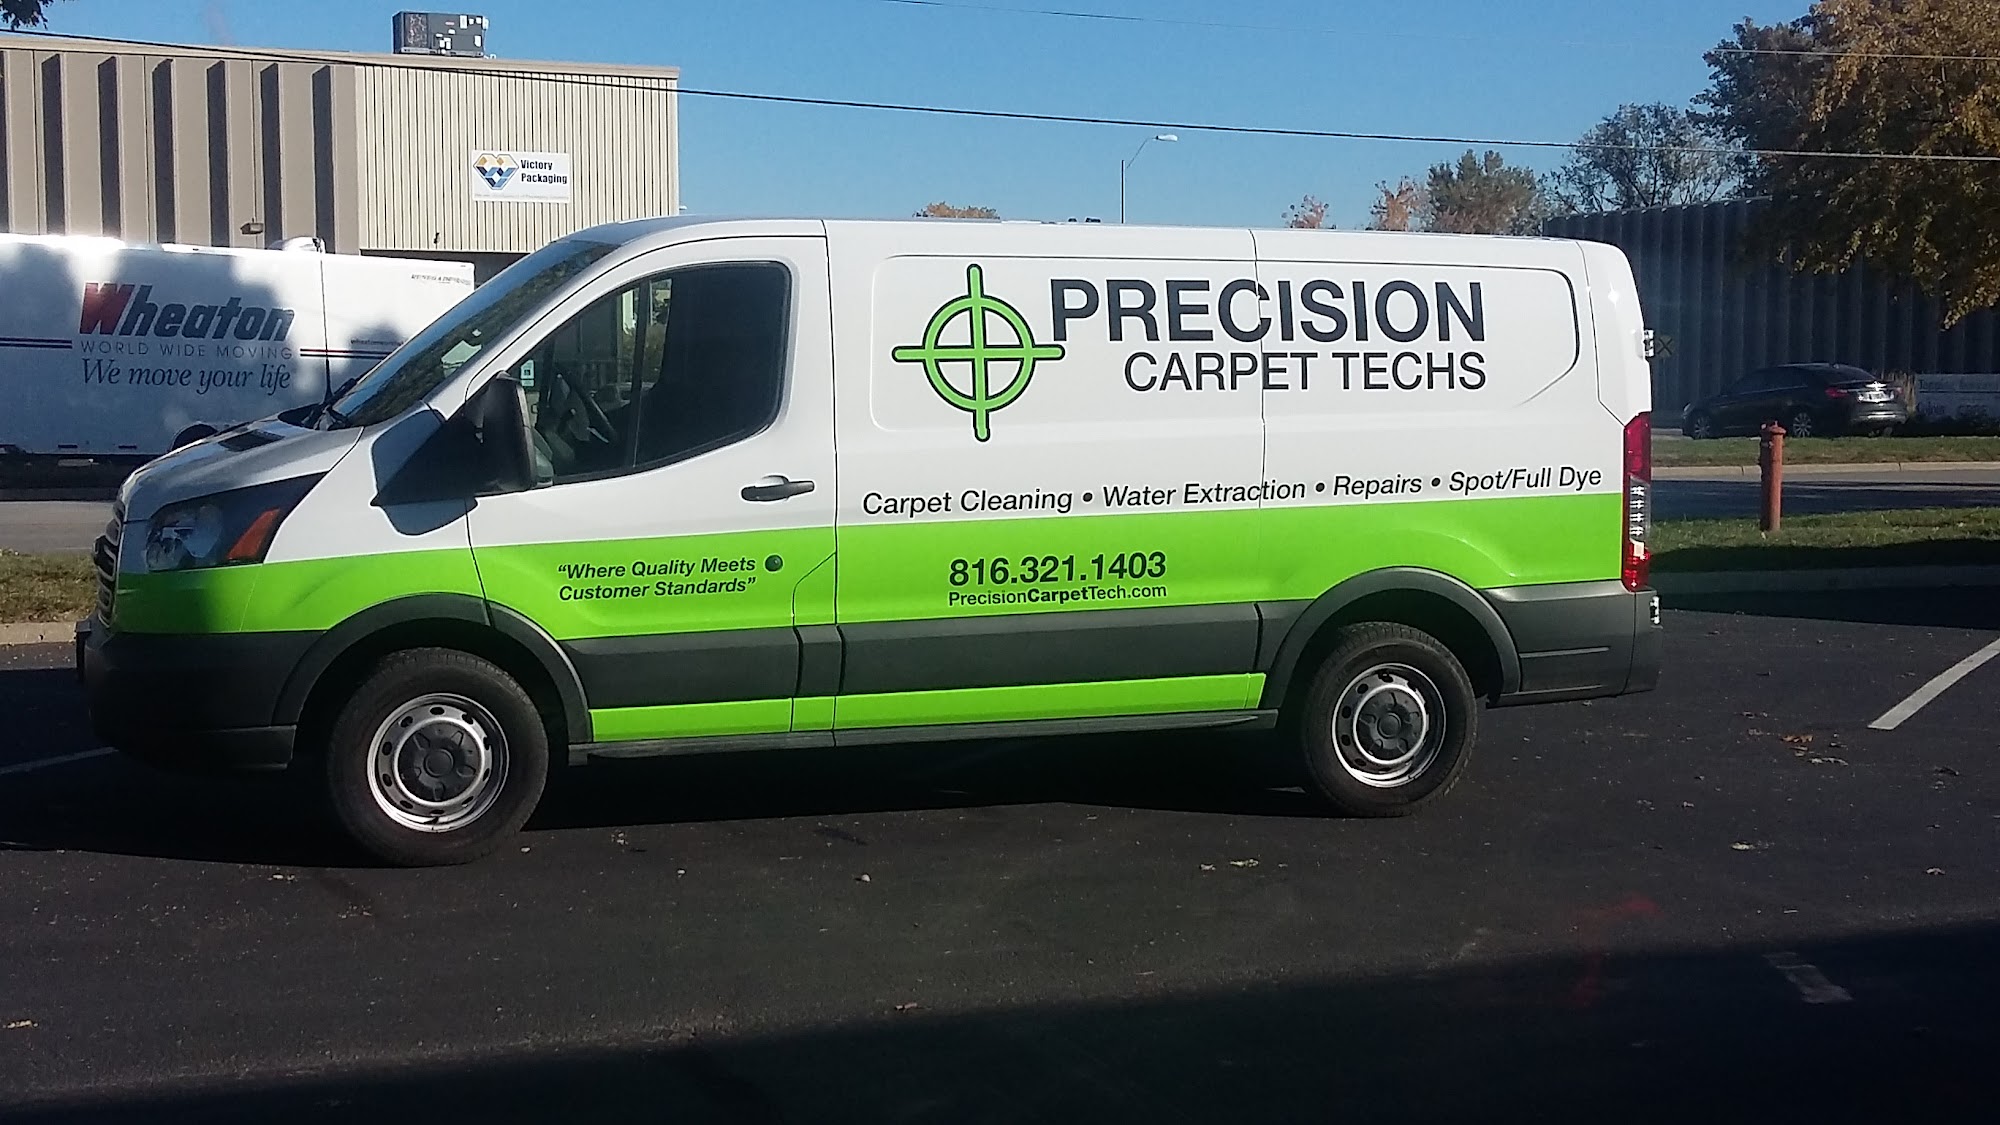 Precision Carpet Techs, LLC